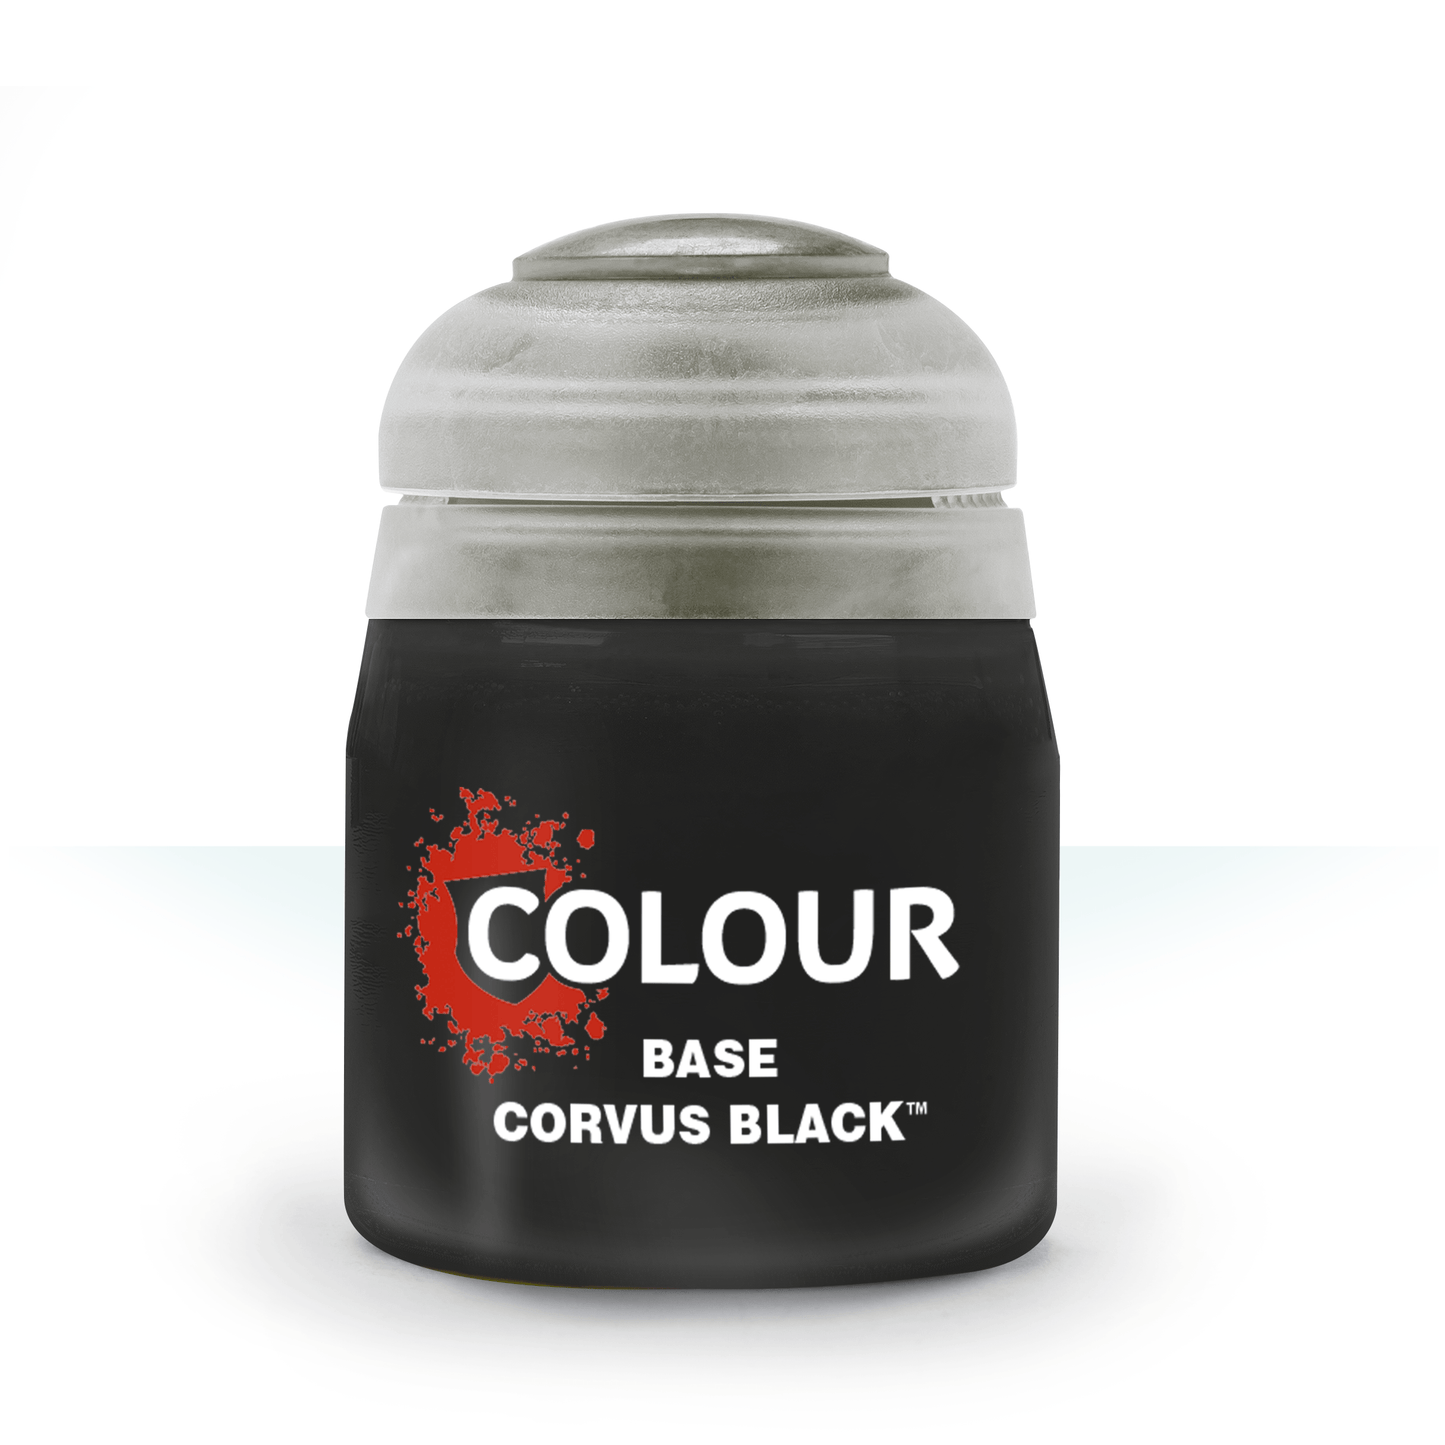 Corvus black - Base